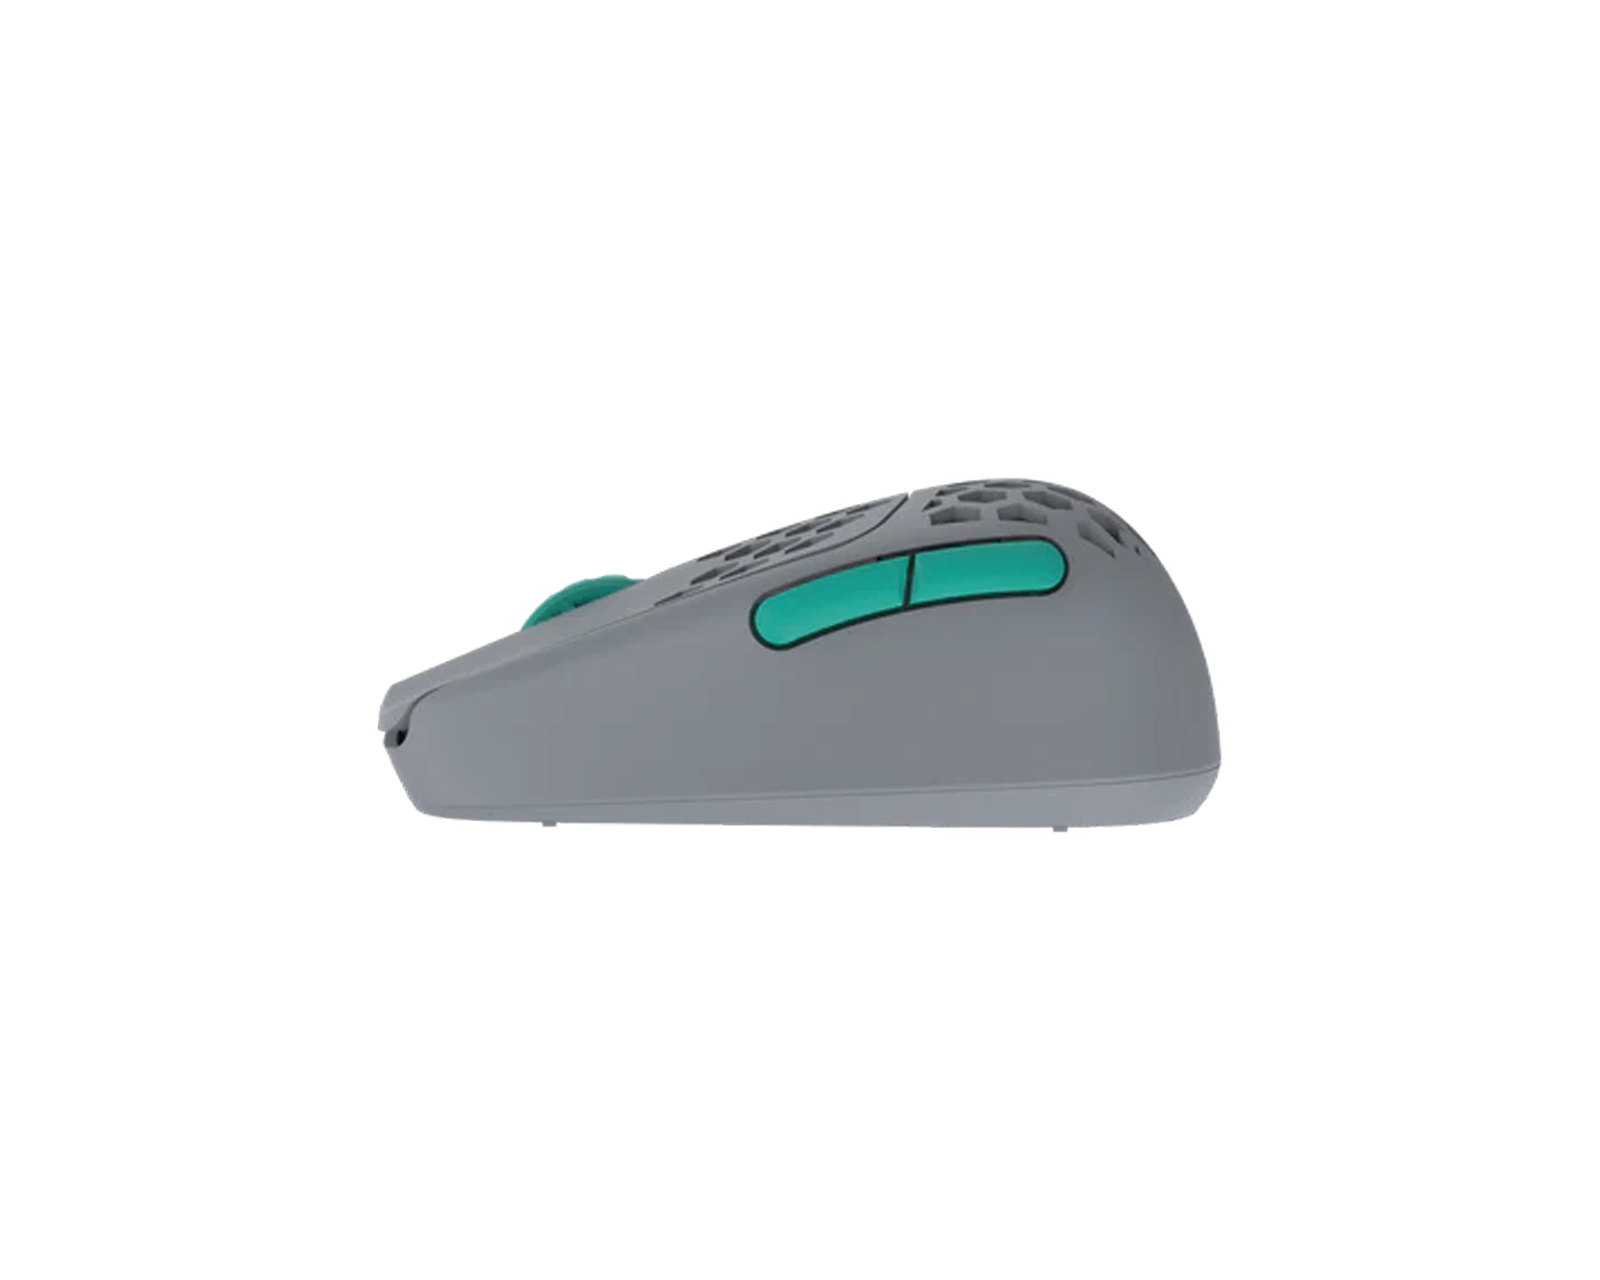 G-Wolves HSK Pro 4K Wireless Mouse Fingertip - Grey/Green - us